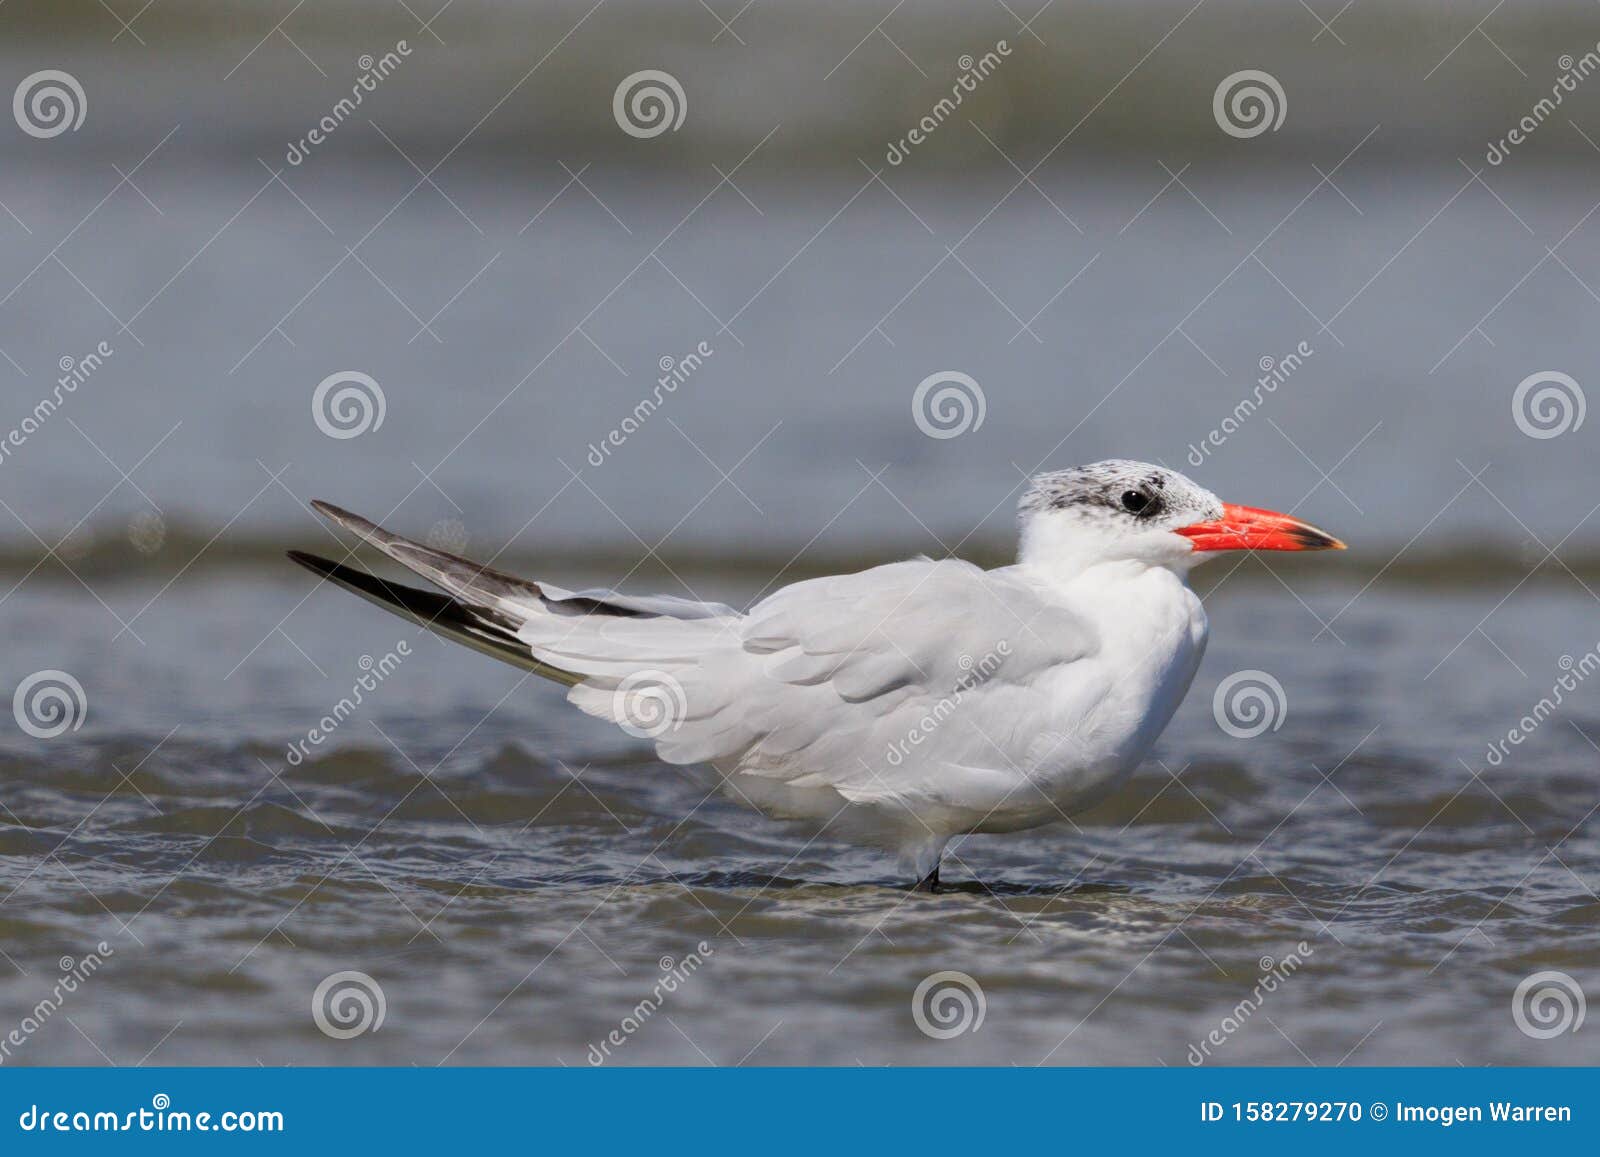 Caspian Tern in Australasia Stock Photo - of bird,